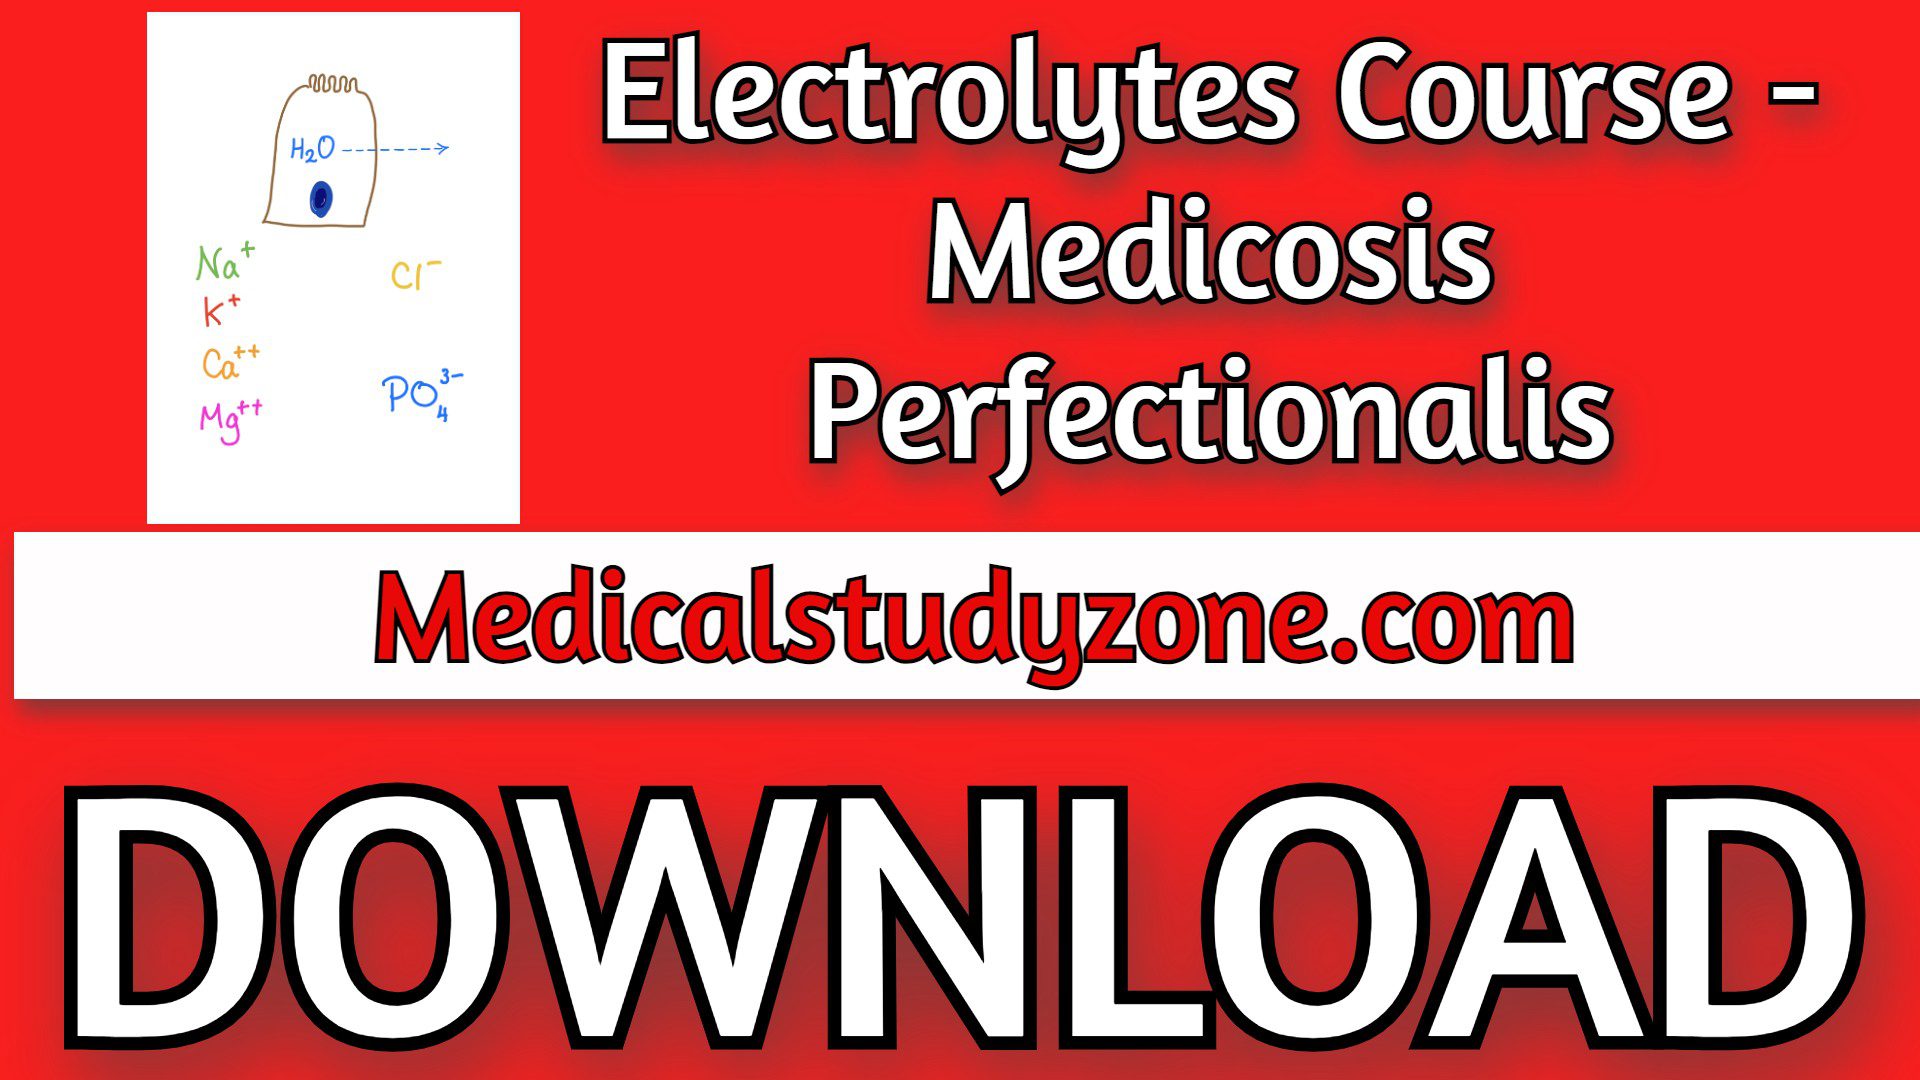 Electrolytes Course 2023 - Medicosis Perfectionalis Free Download